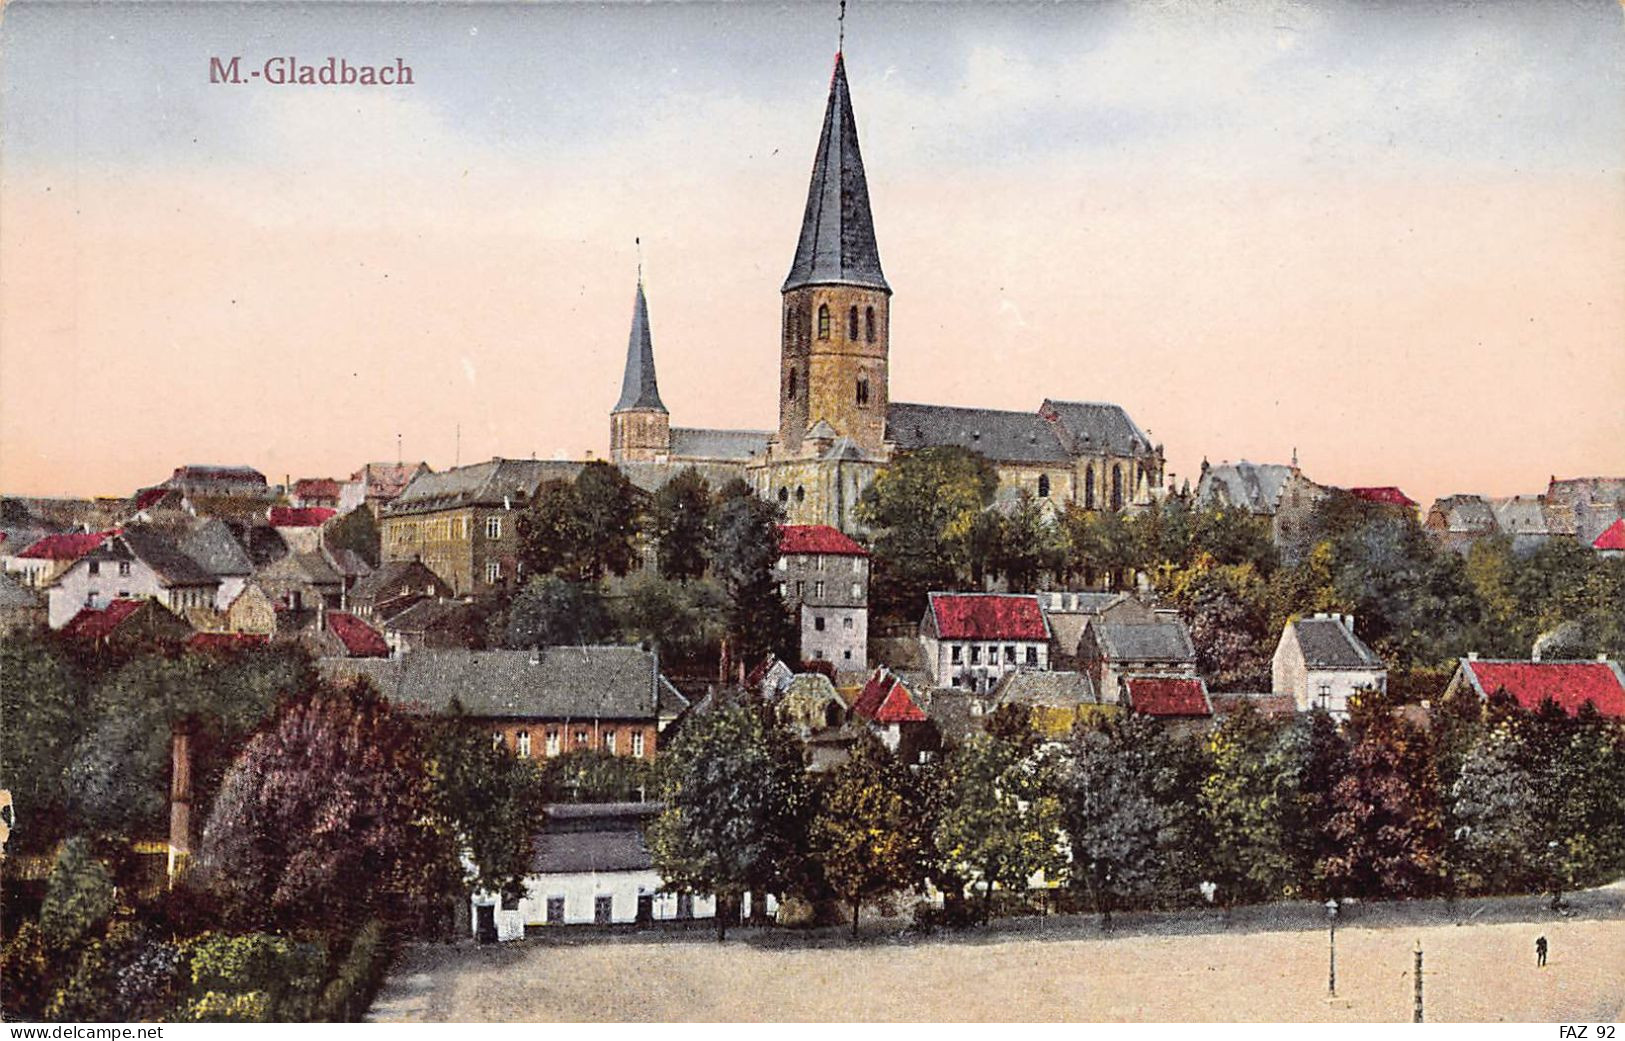 Mönchengladbach - Moenchengladbach